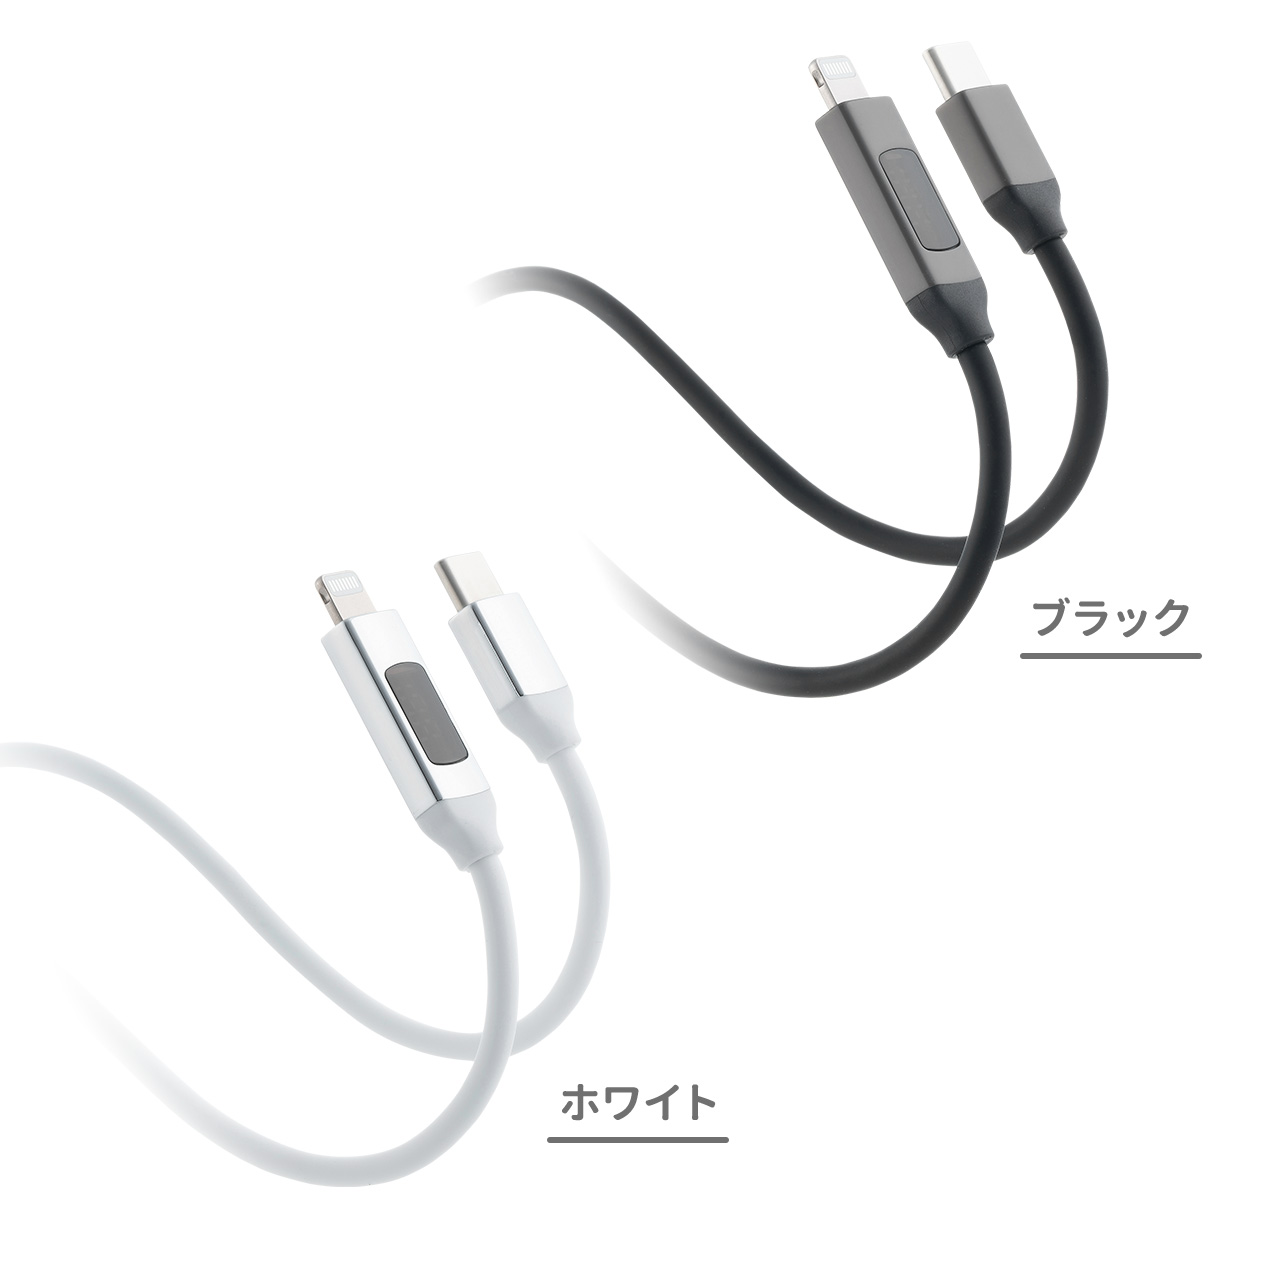 PD電力表示機能付き USB Type-C Lightning ケーブル Apple MFi認証品 PD36W対応 1m やわらかシリコンケーブル 充電 データ転送 iPhone iPad ホワイト 500-IPLM032W